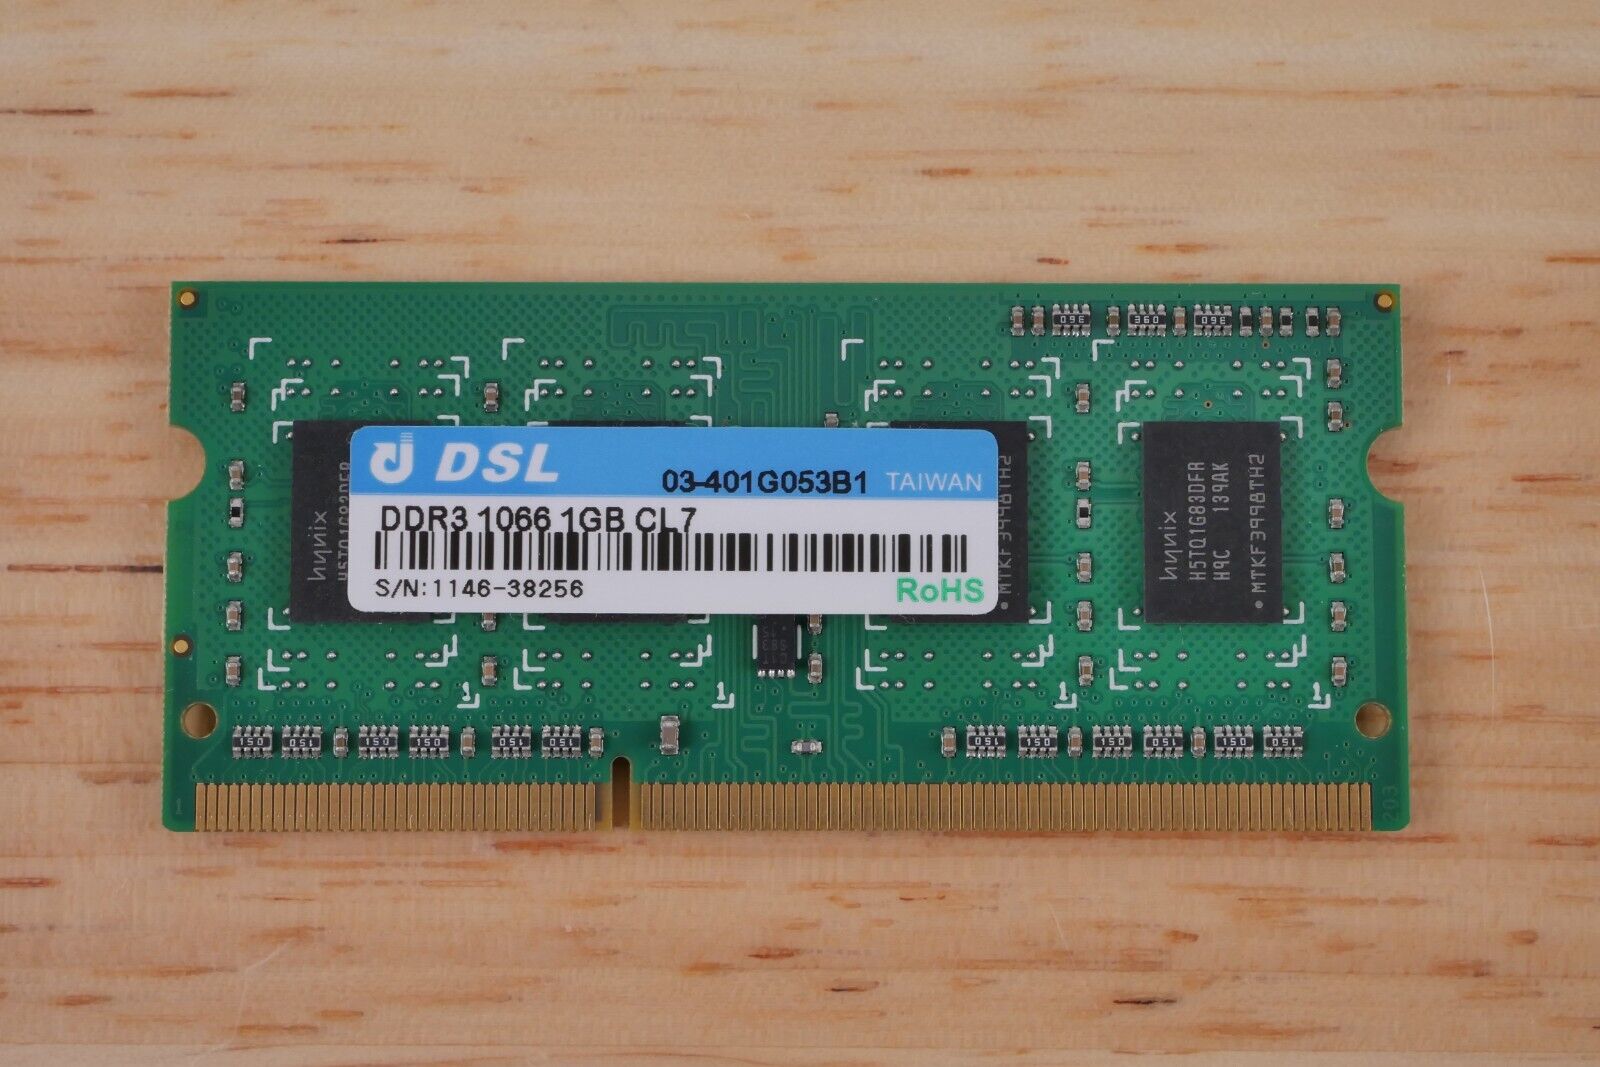 Synology NAS DS1812+ RAM DDR3 1066 1GB CL7 03-401G053B1